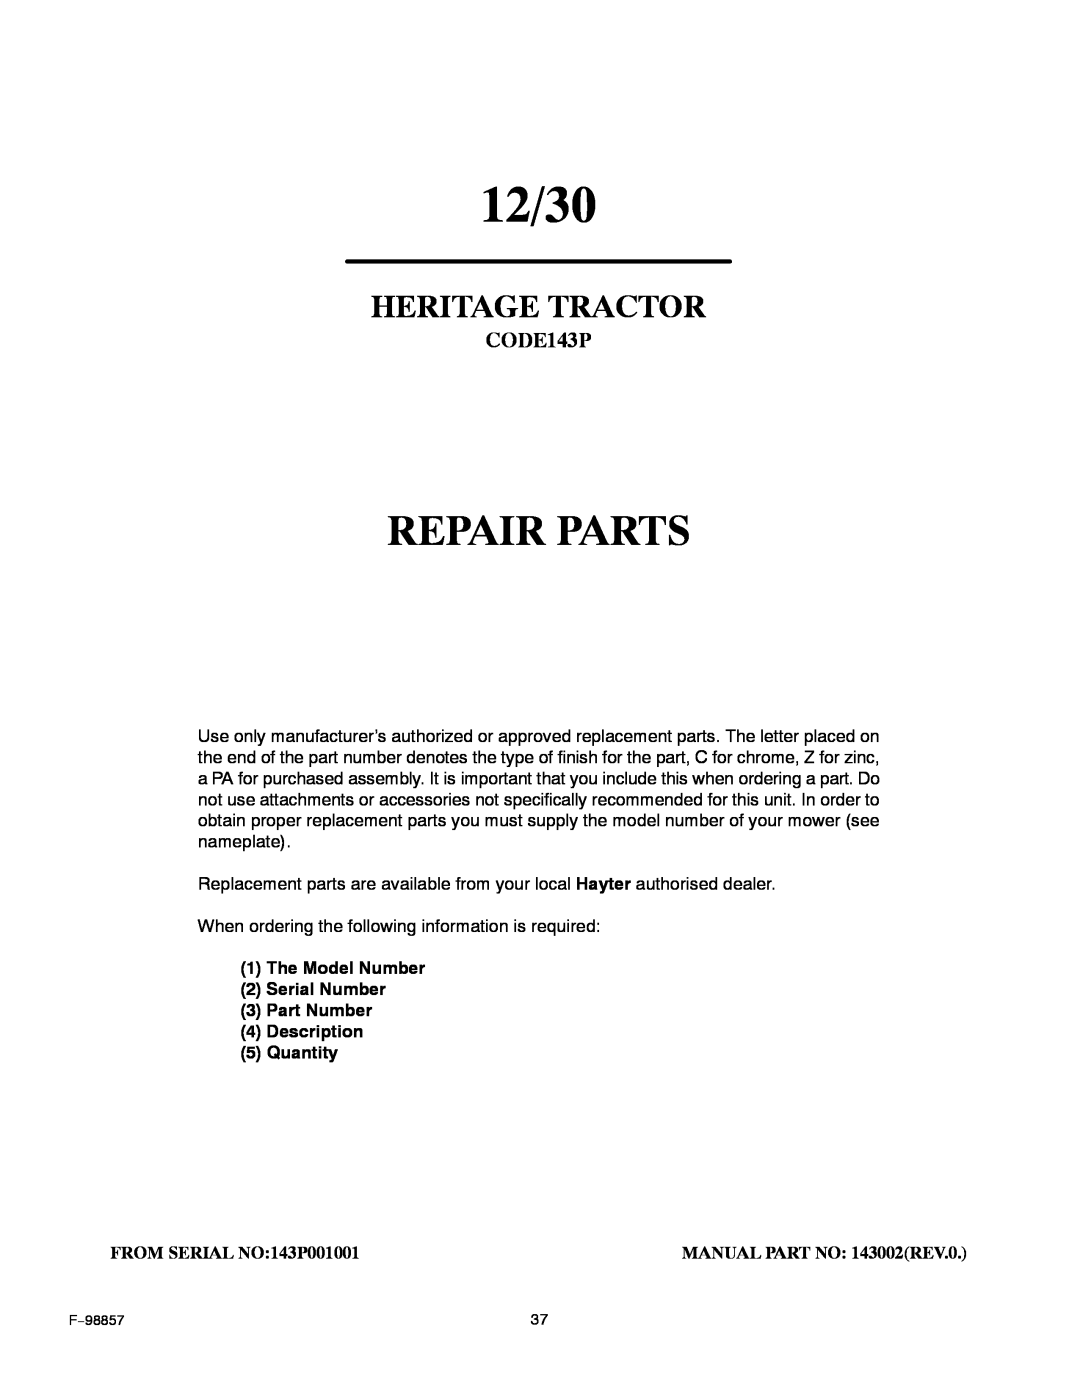 Hayter Mowers 30-Dec Repair Parts, 12/30, Heritage Tractor, CODE143P, FROM SERIAL NO143P001001, MANUAL PART NO 143002REV.0 